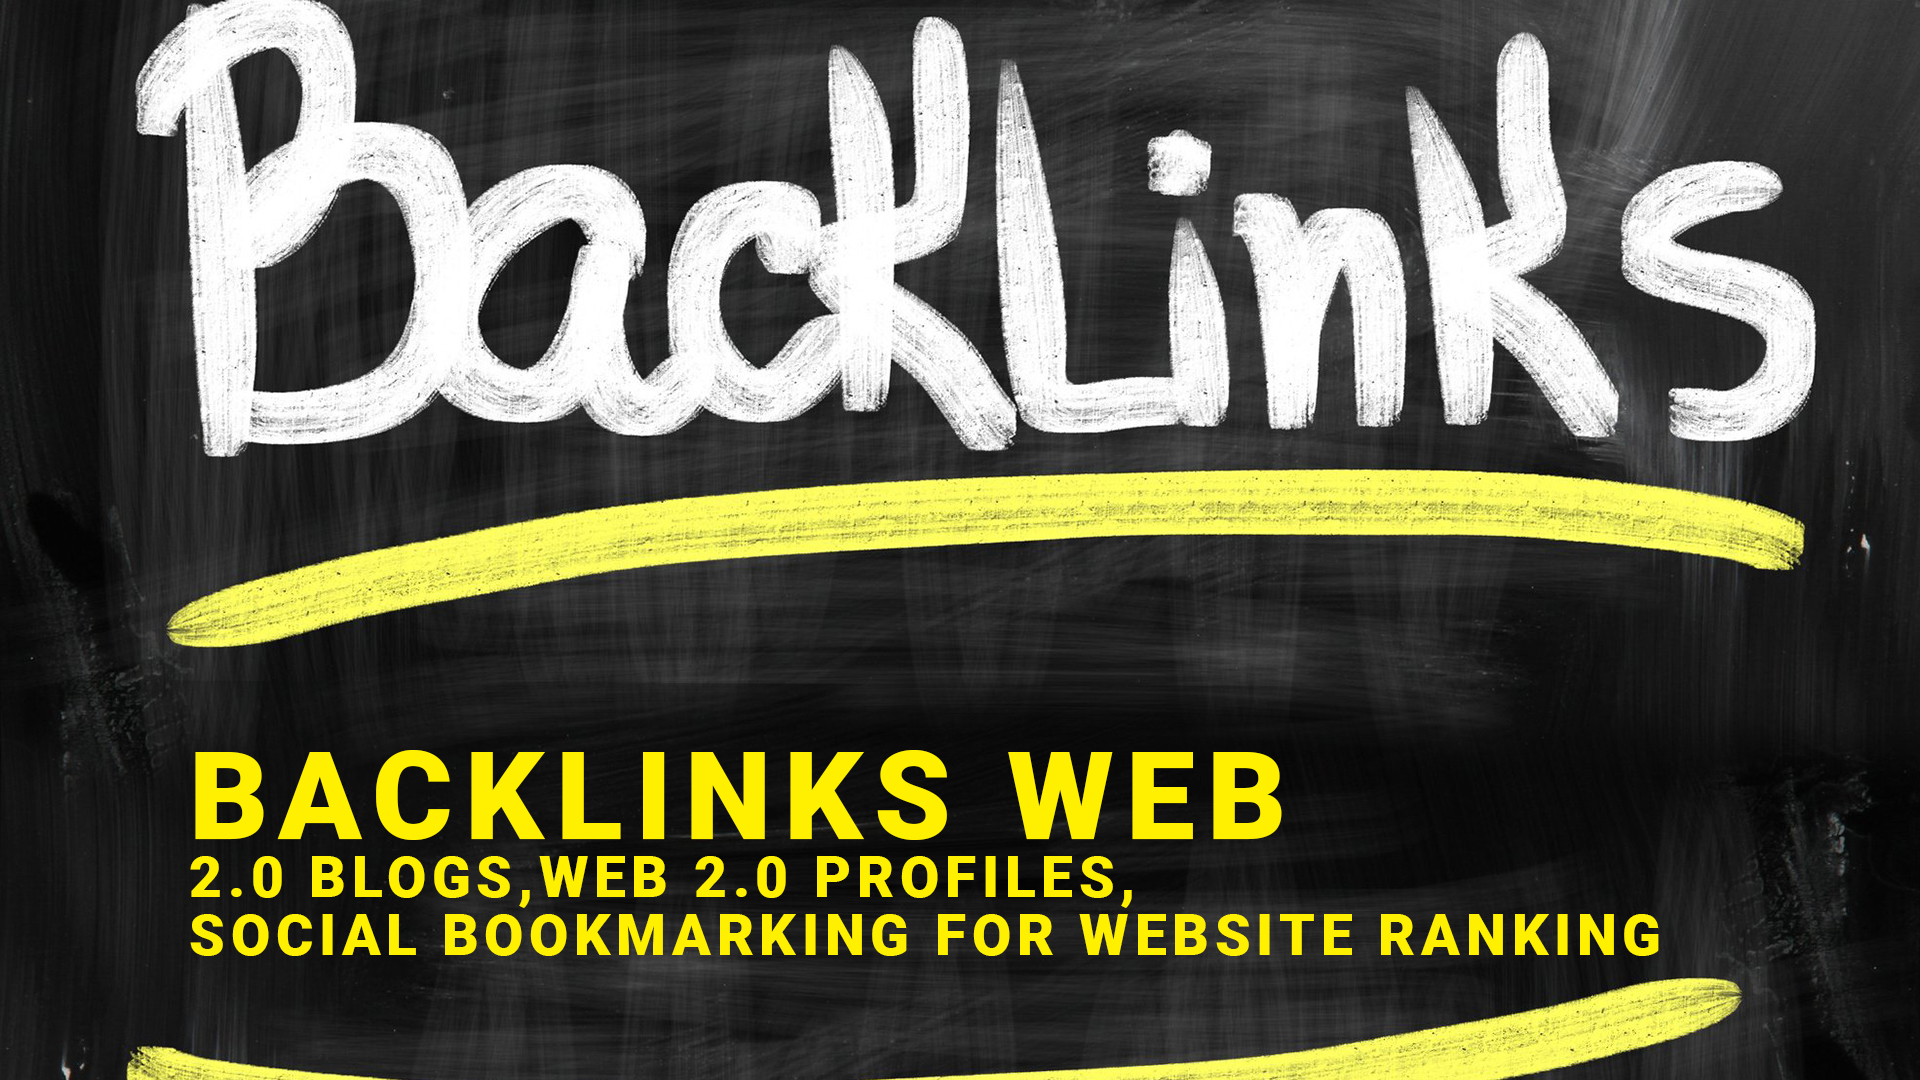 40 000 SEO Backlinks web 2.0 blogs,Web 2.0 Profiles, Social Bookmarking for Website Ranking